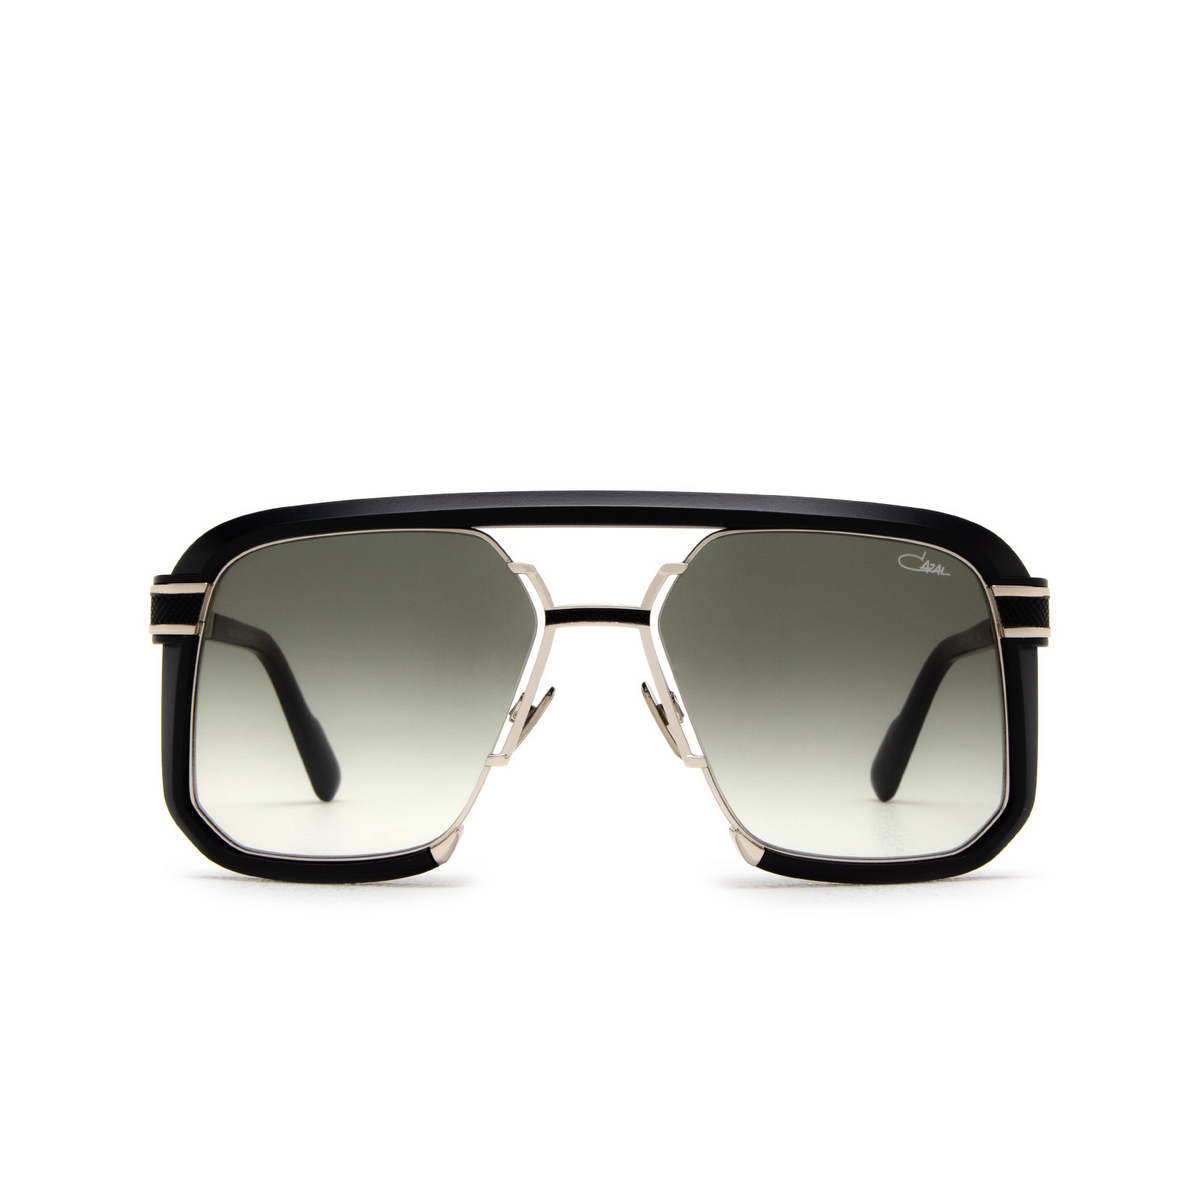 Cazal 682 Sunglasses 002 Black - Silver - front view